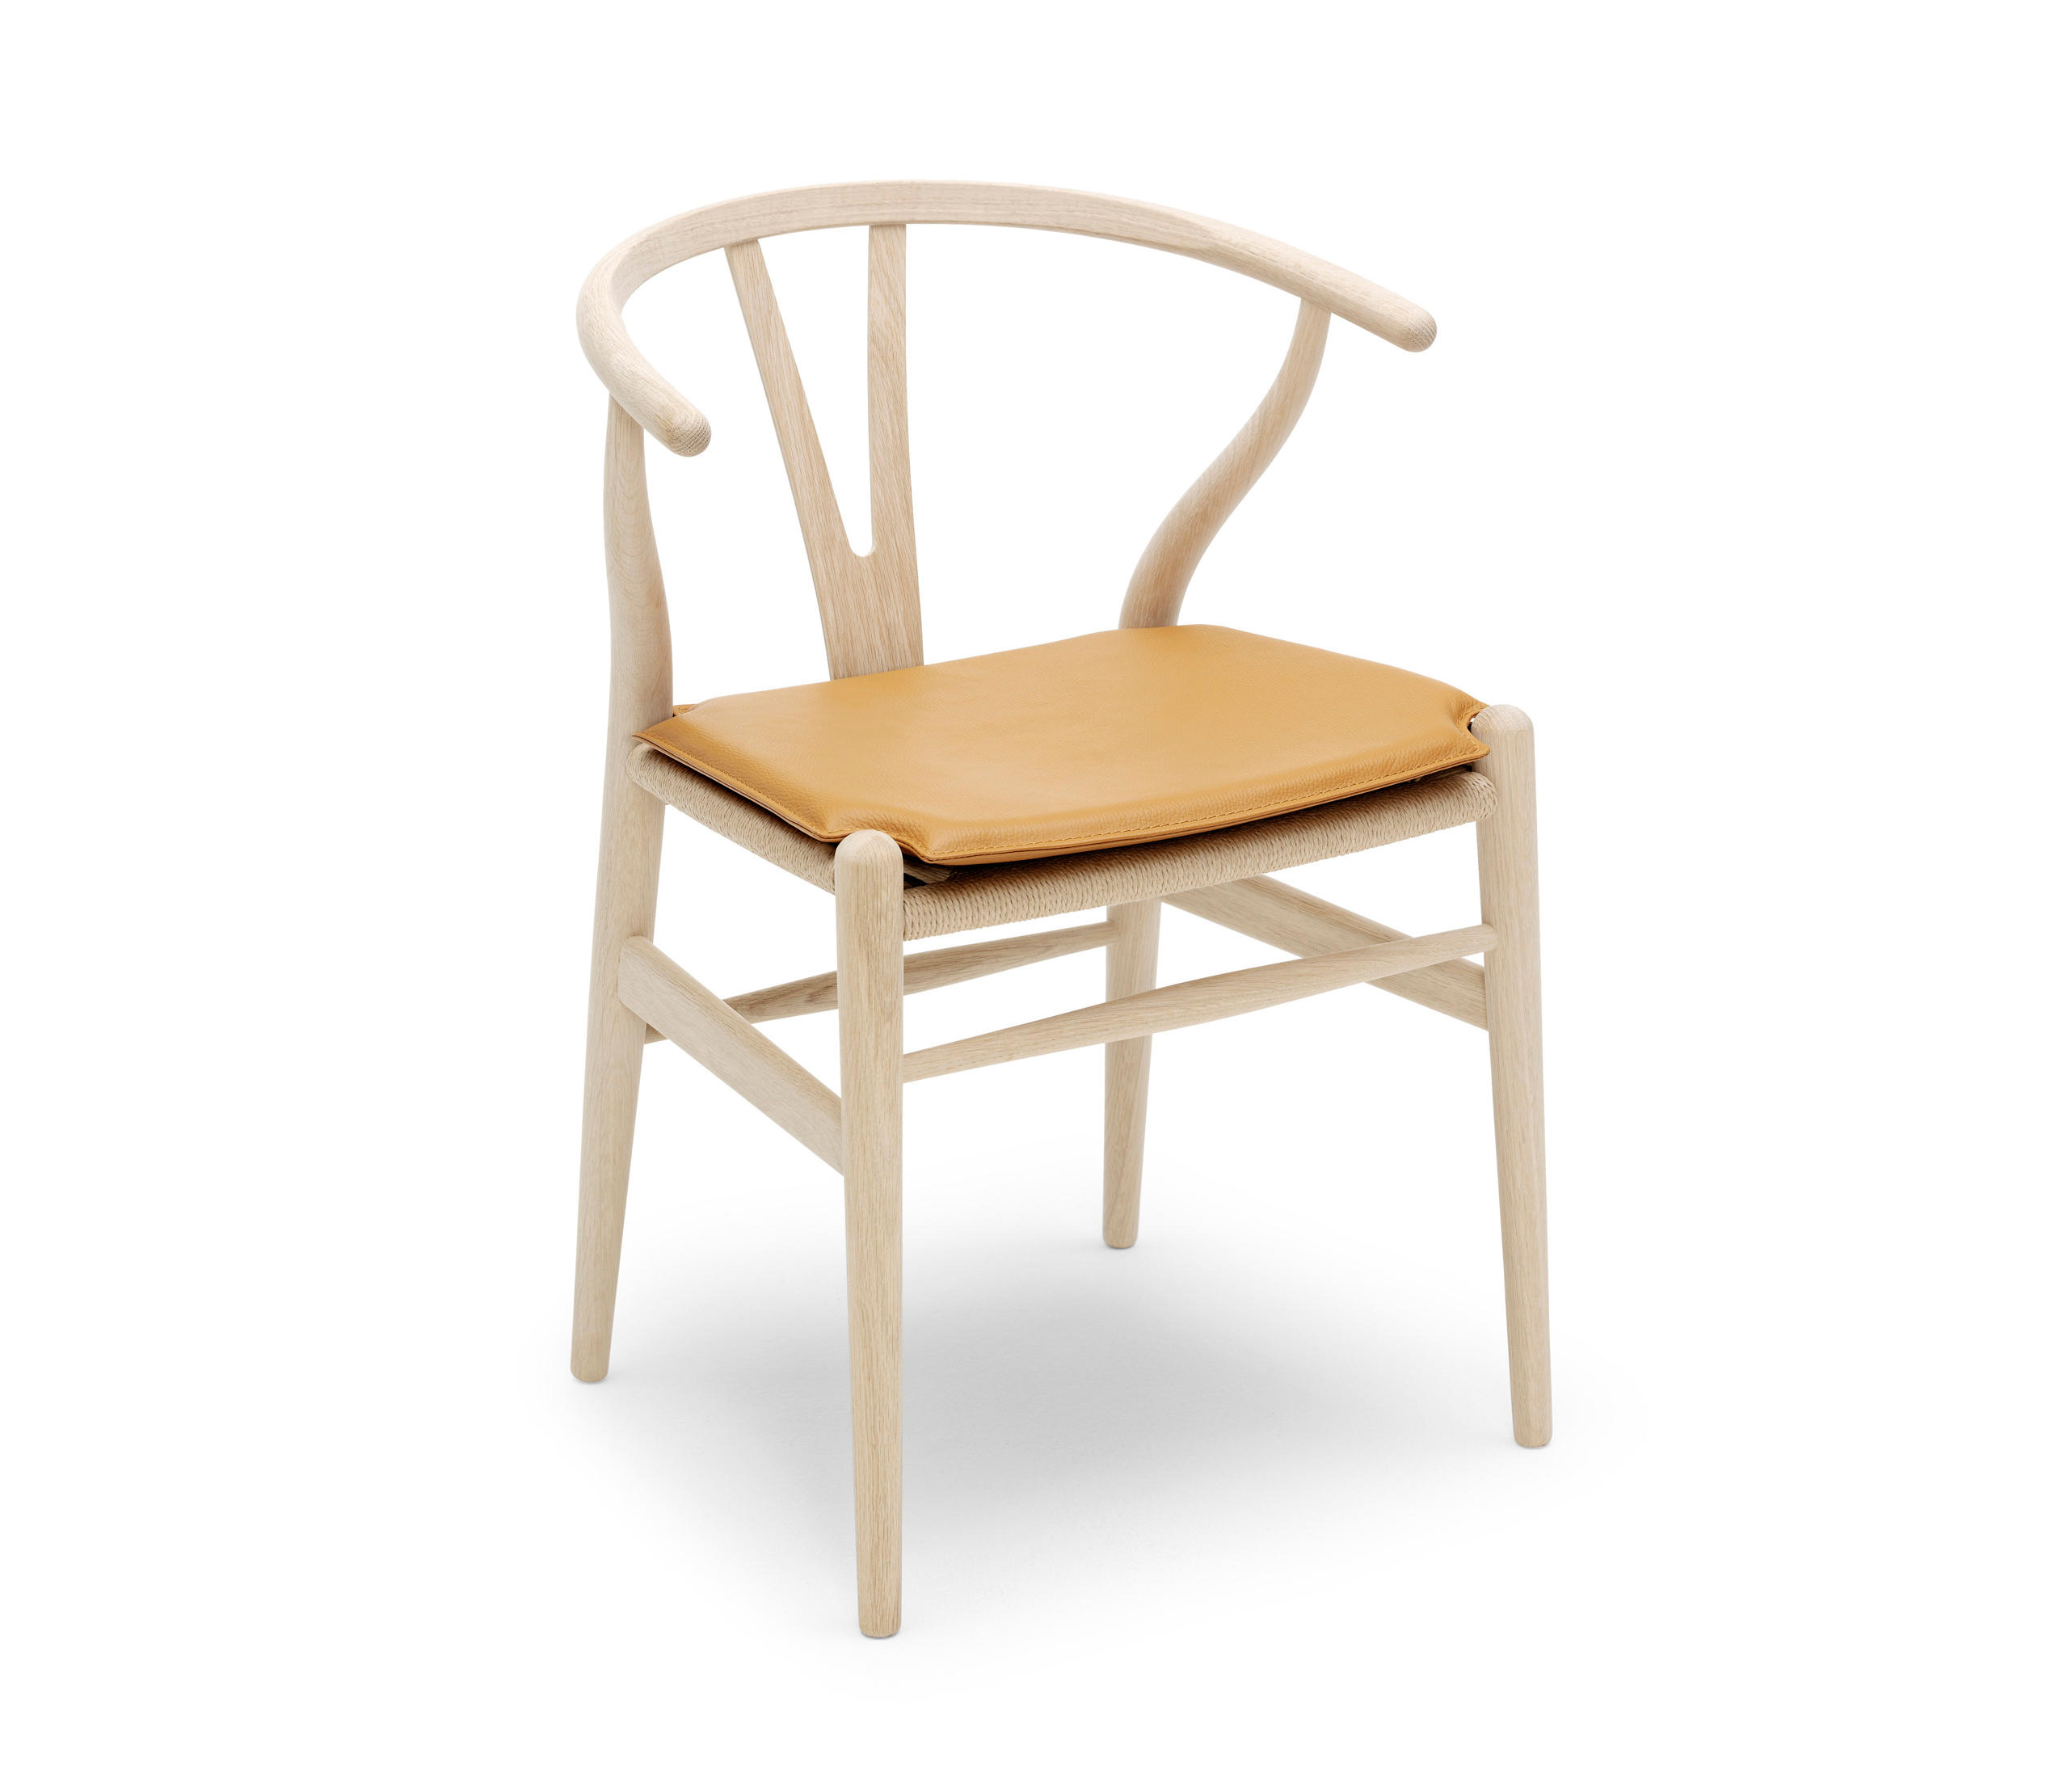 Macadam metalen Eik CH24 - Chairs from Carl Hansen & Søn | Architonic